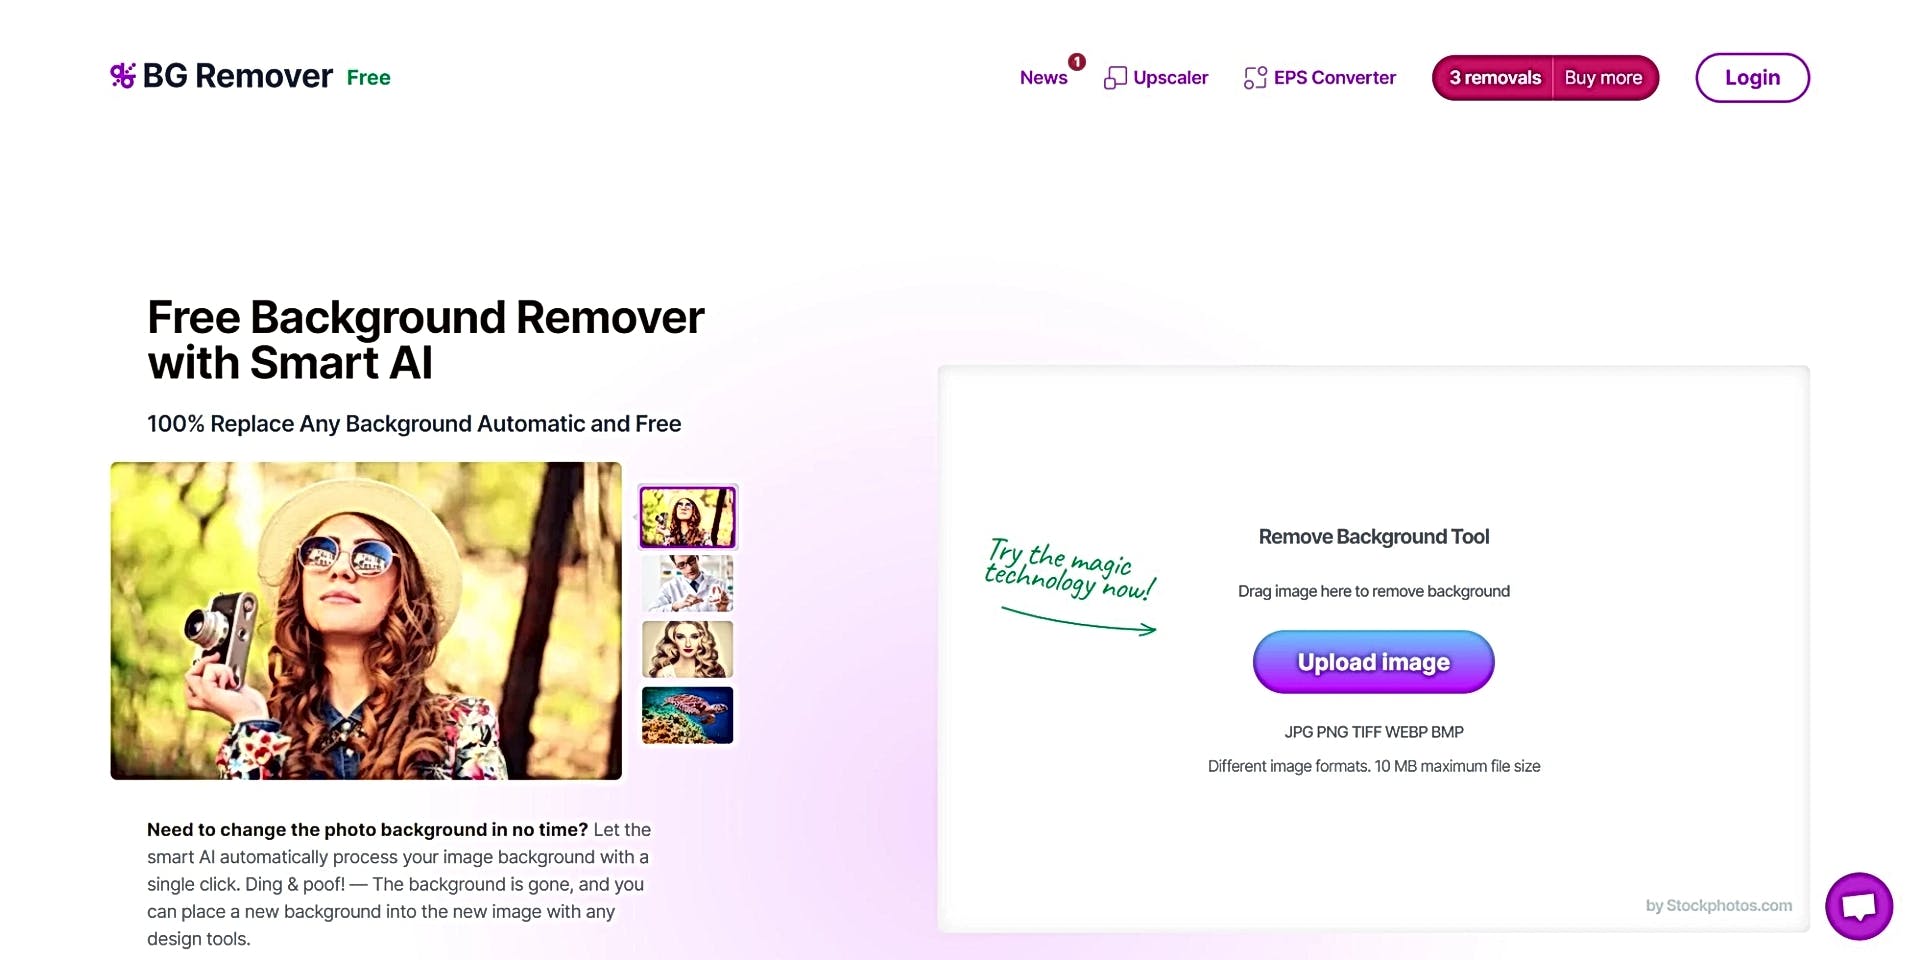 BG Remover featured